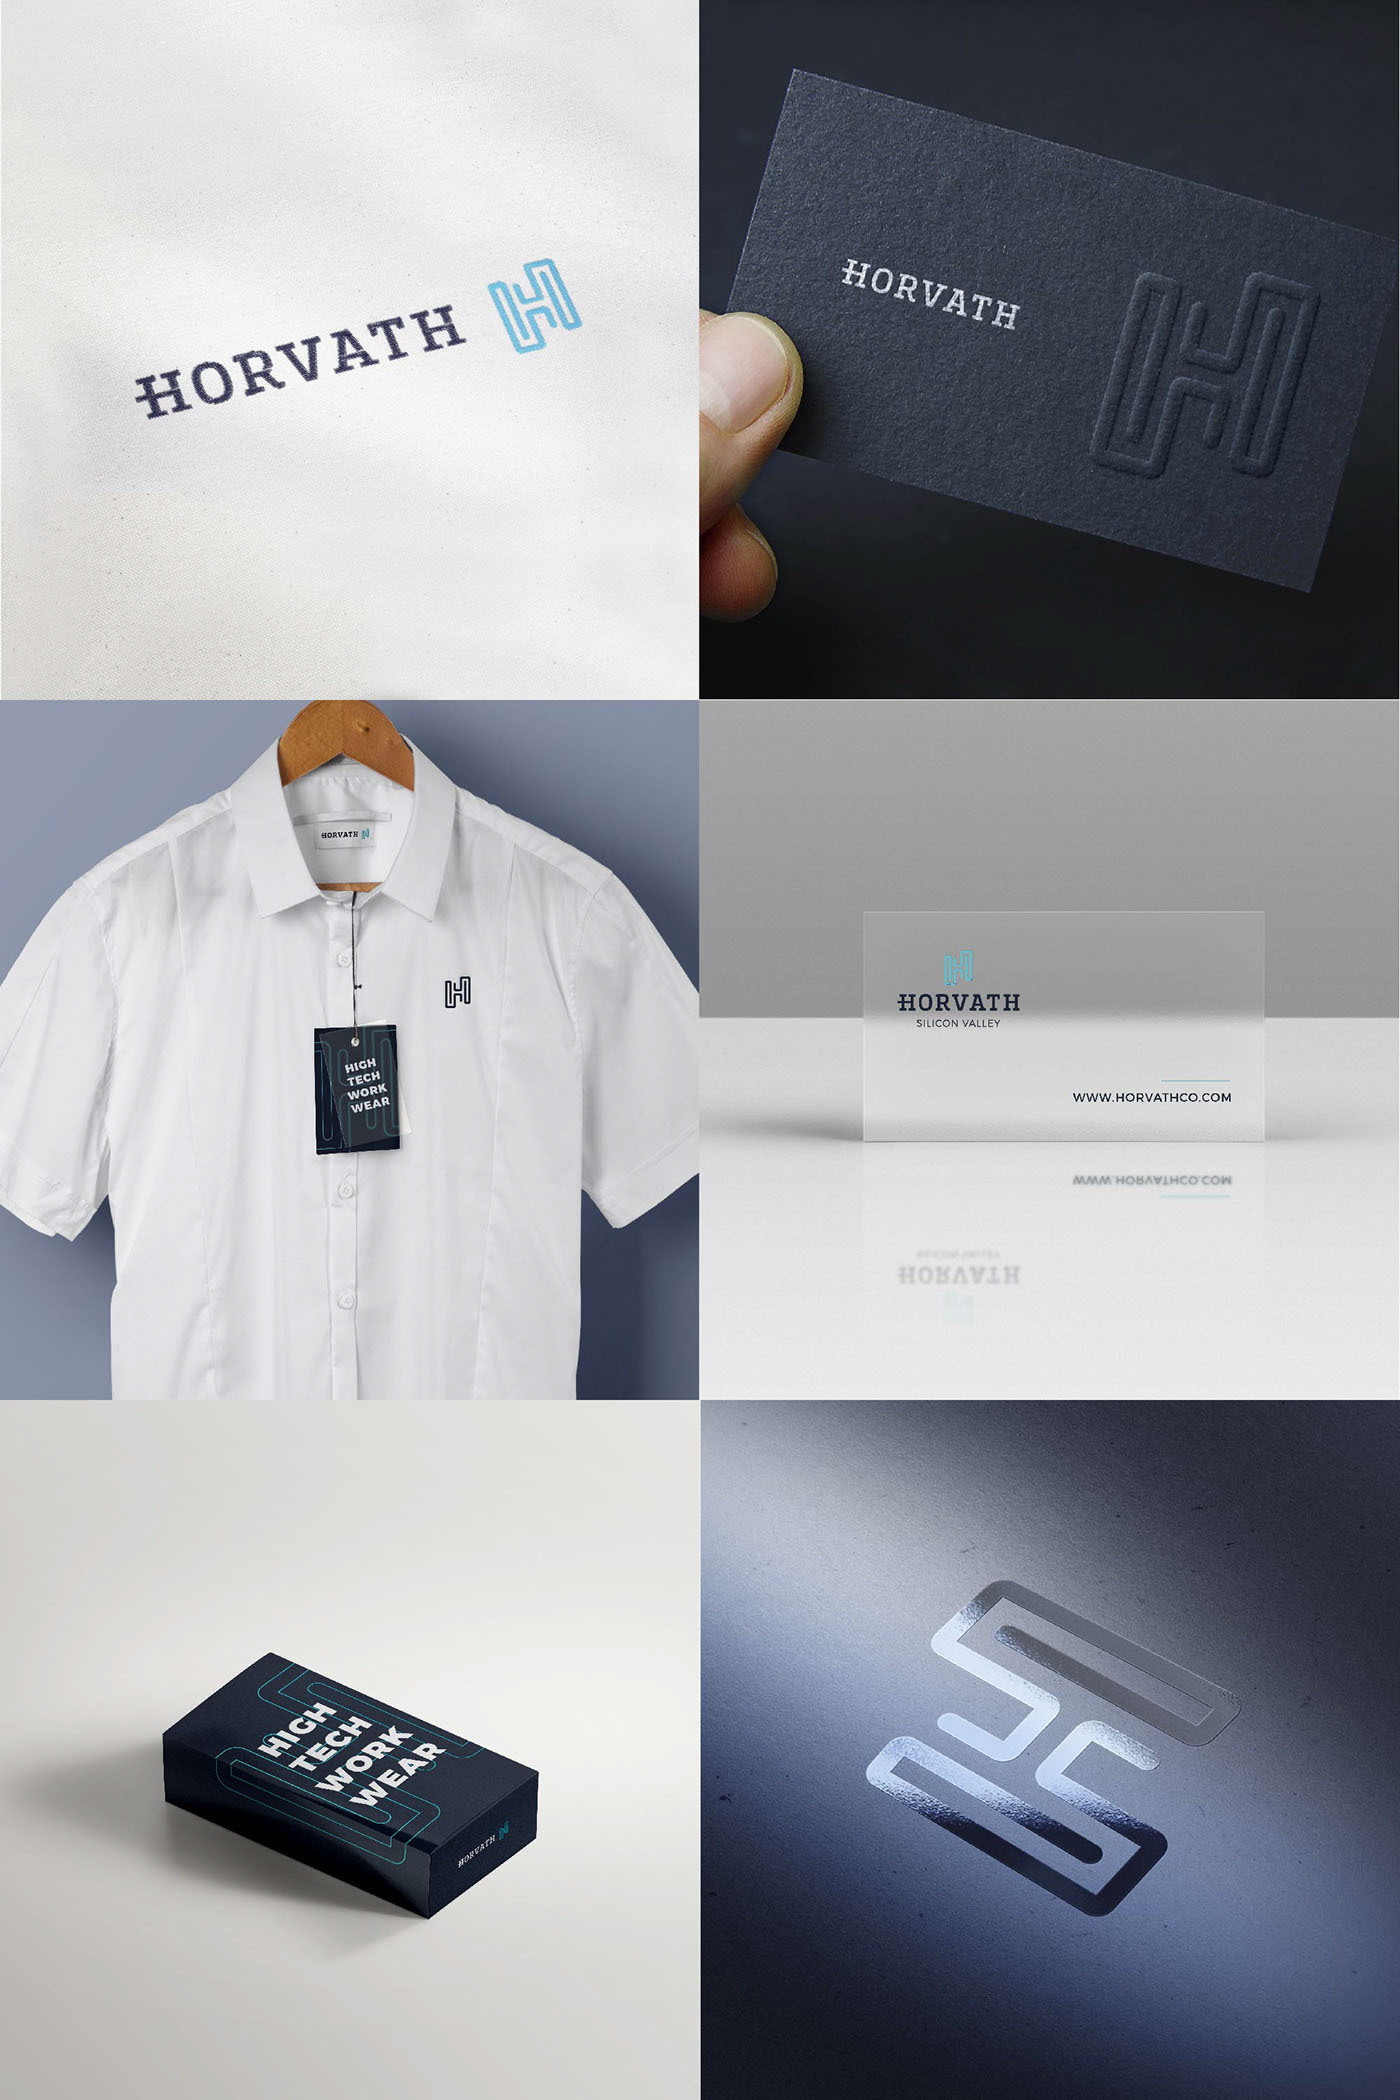 horvath visual identity High Tech work wear fashion brand